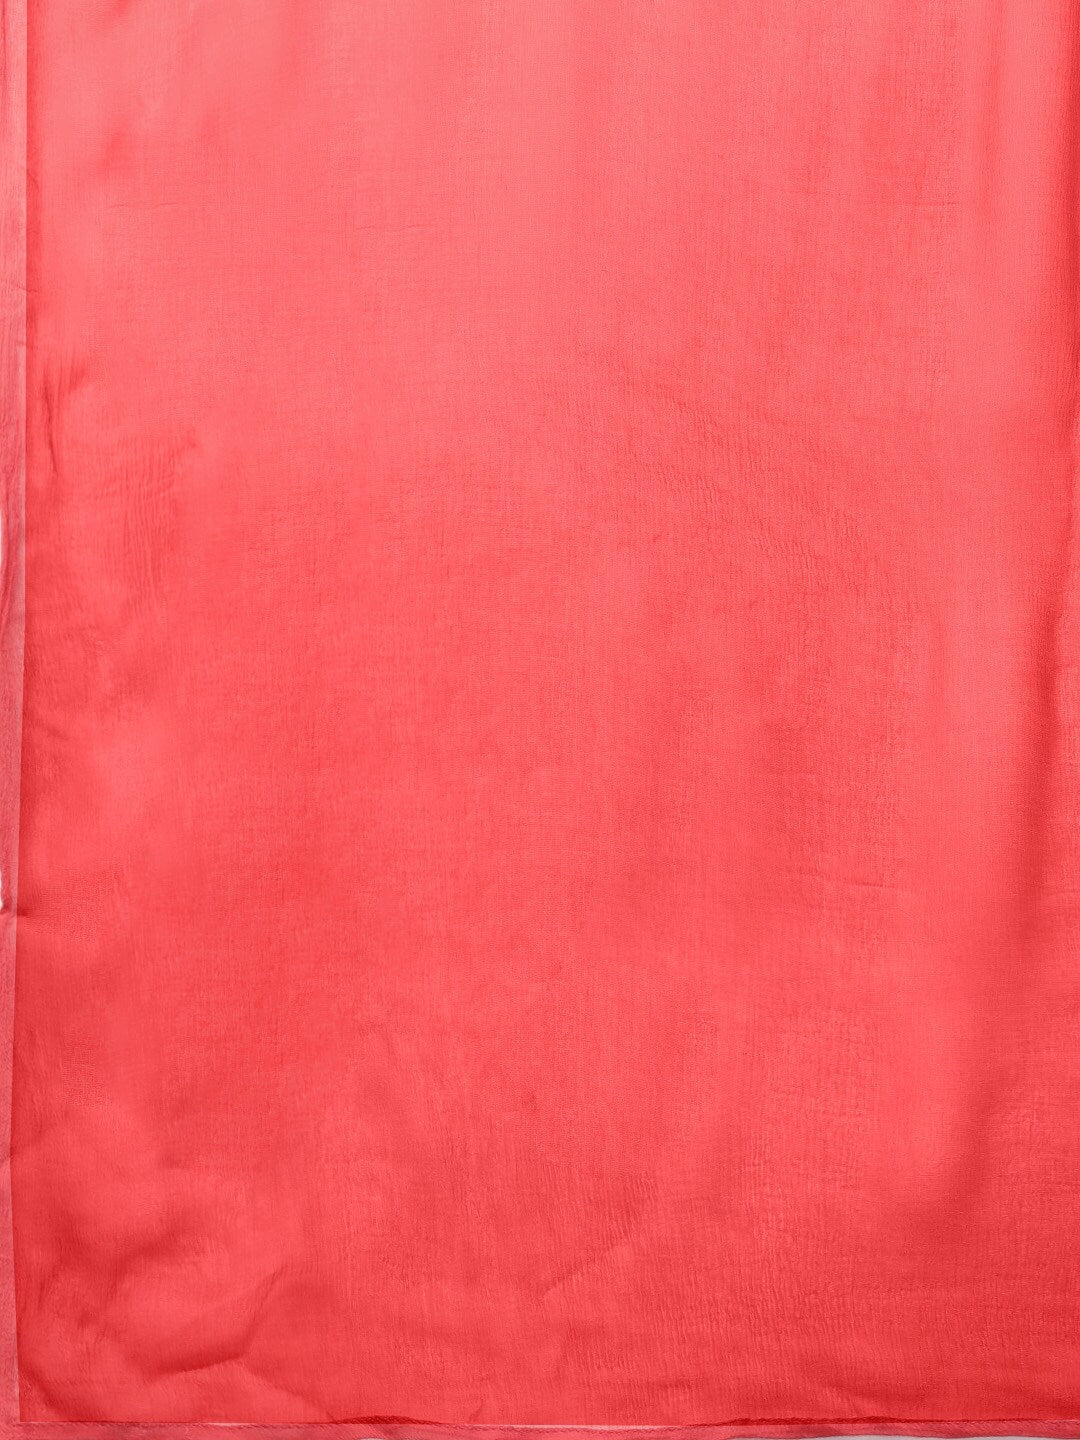 Pink Striped Lehenga Choli With Dupatta